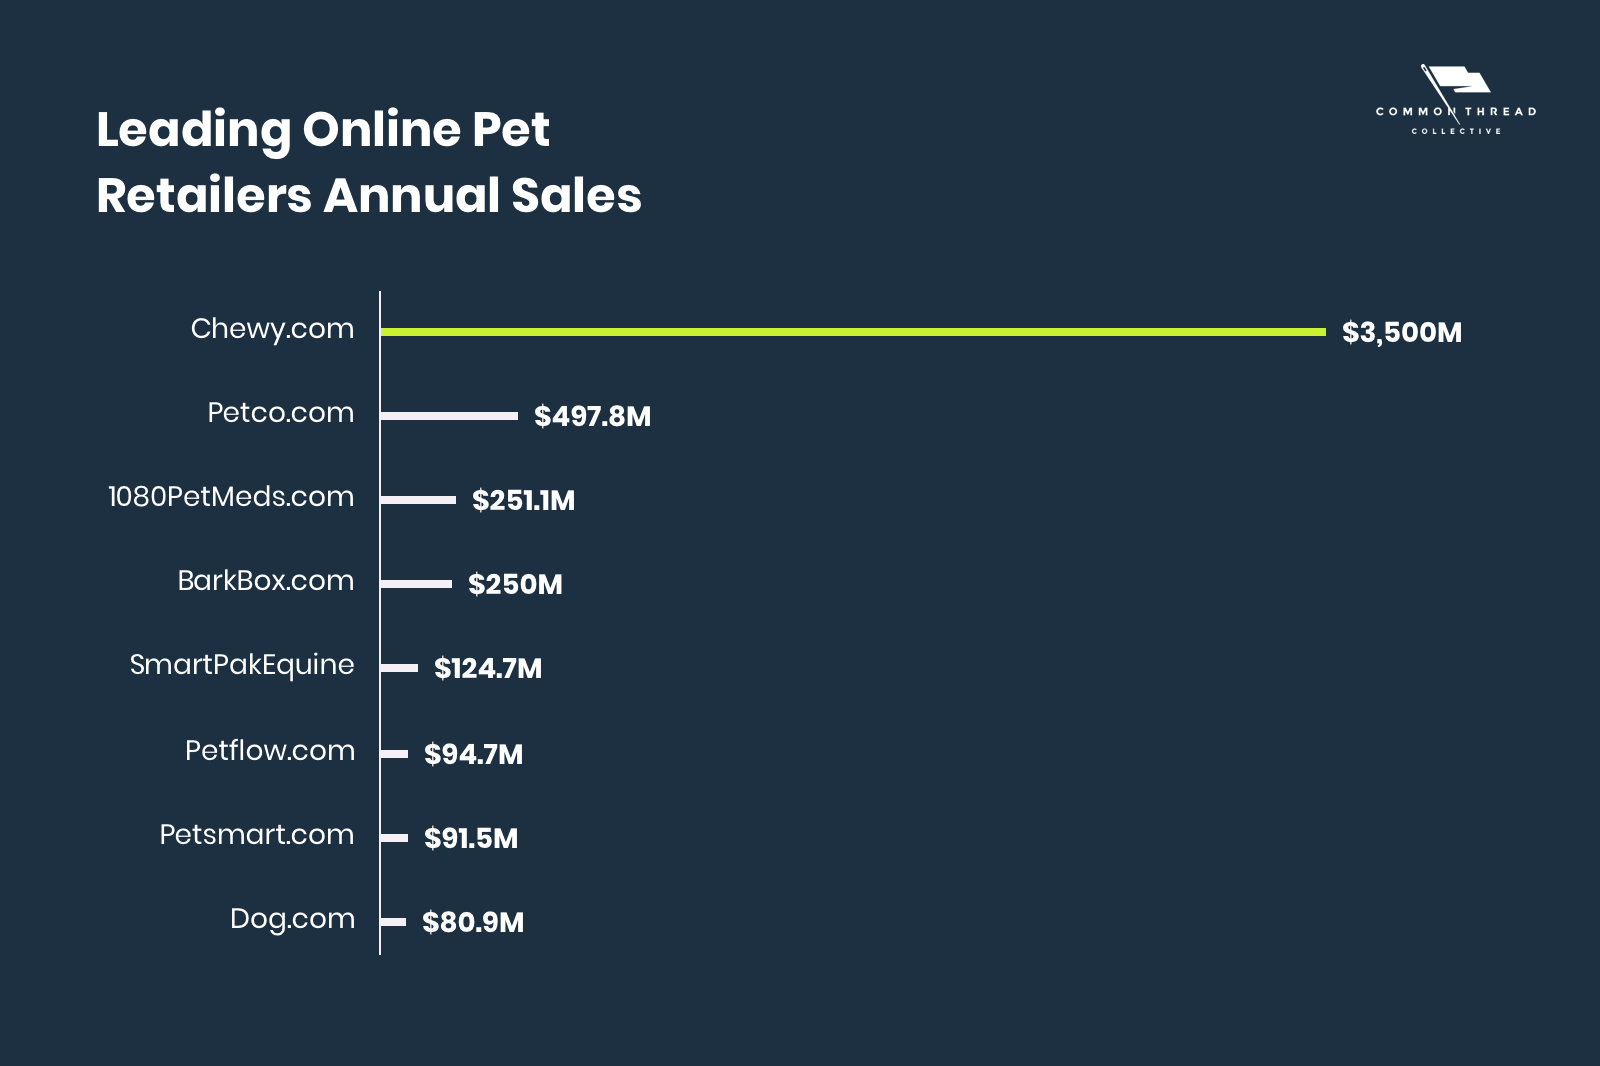 Leading online pet retailers annual sales